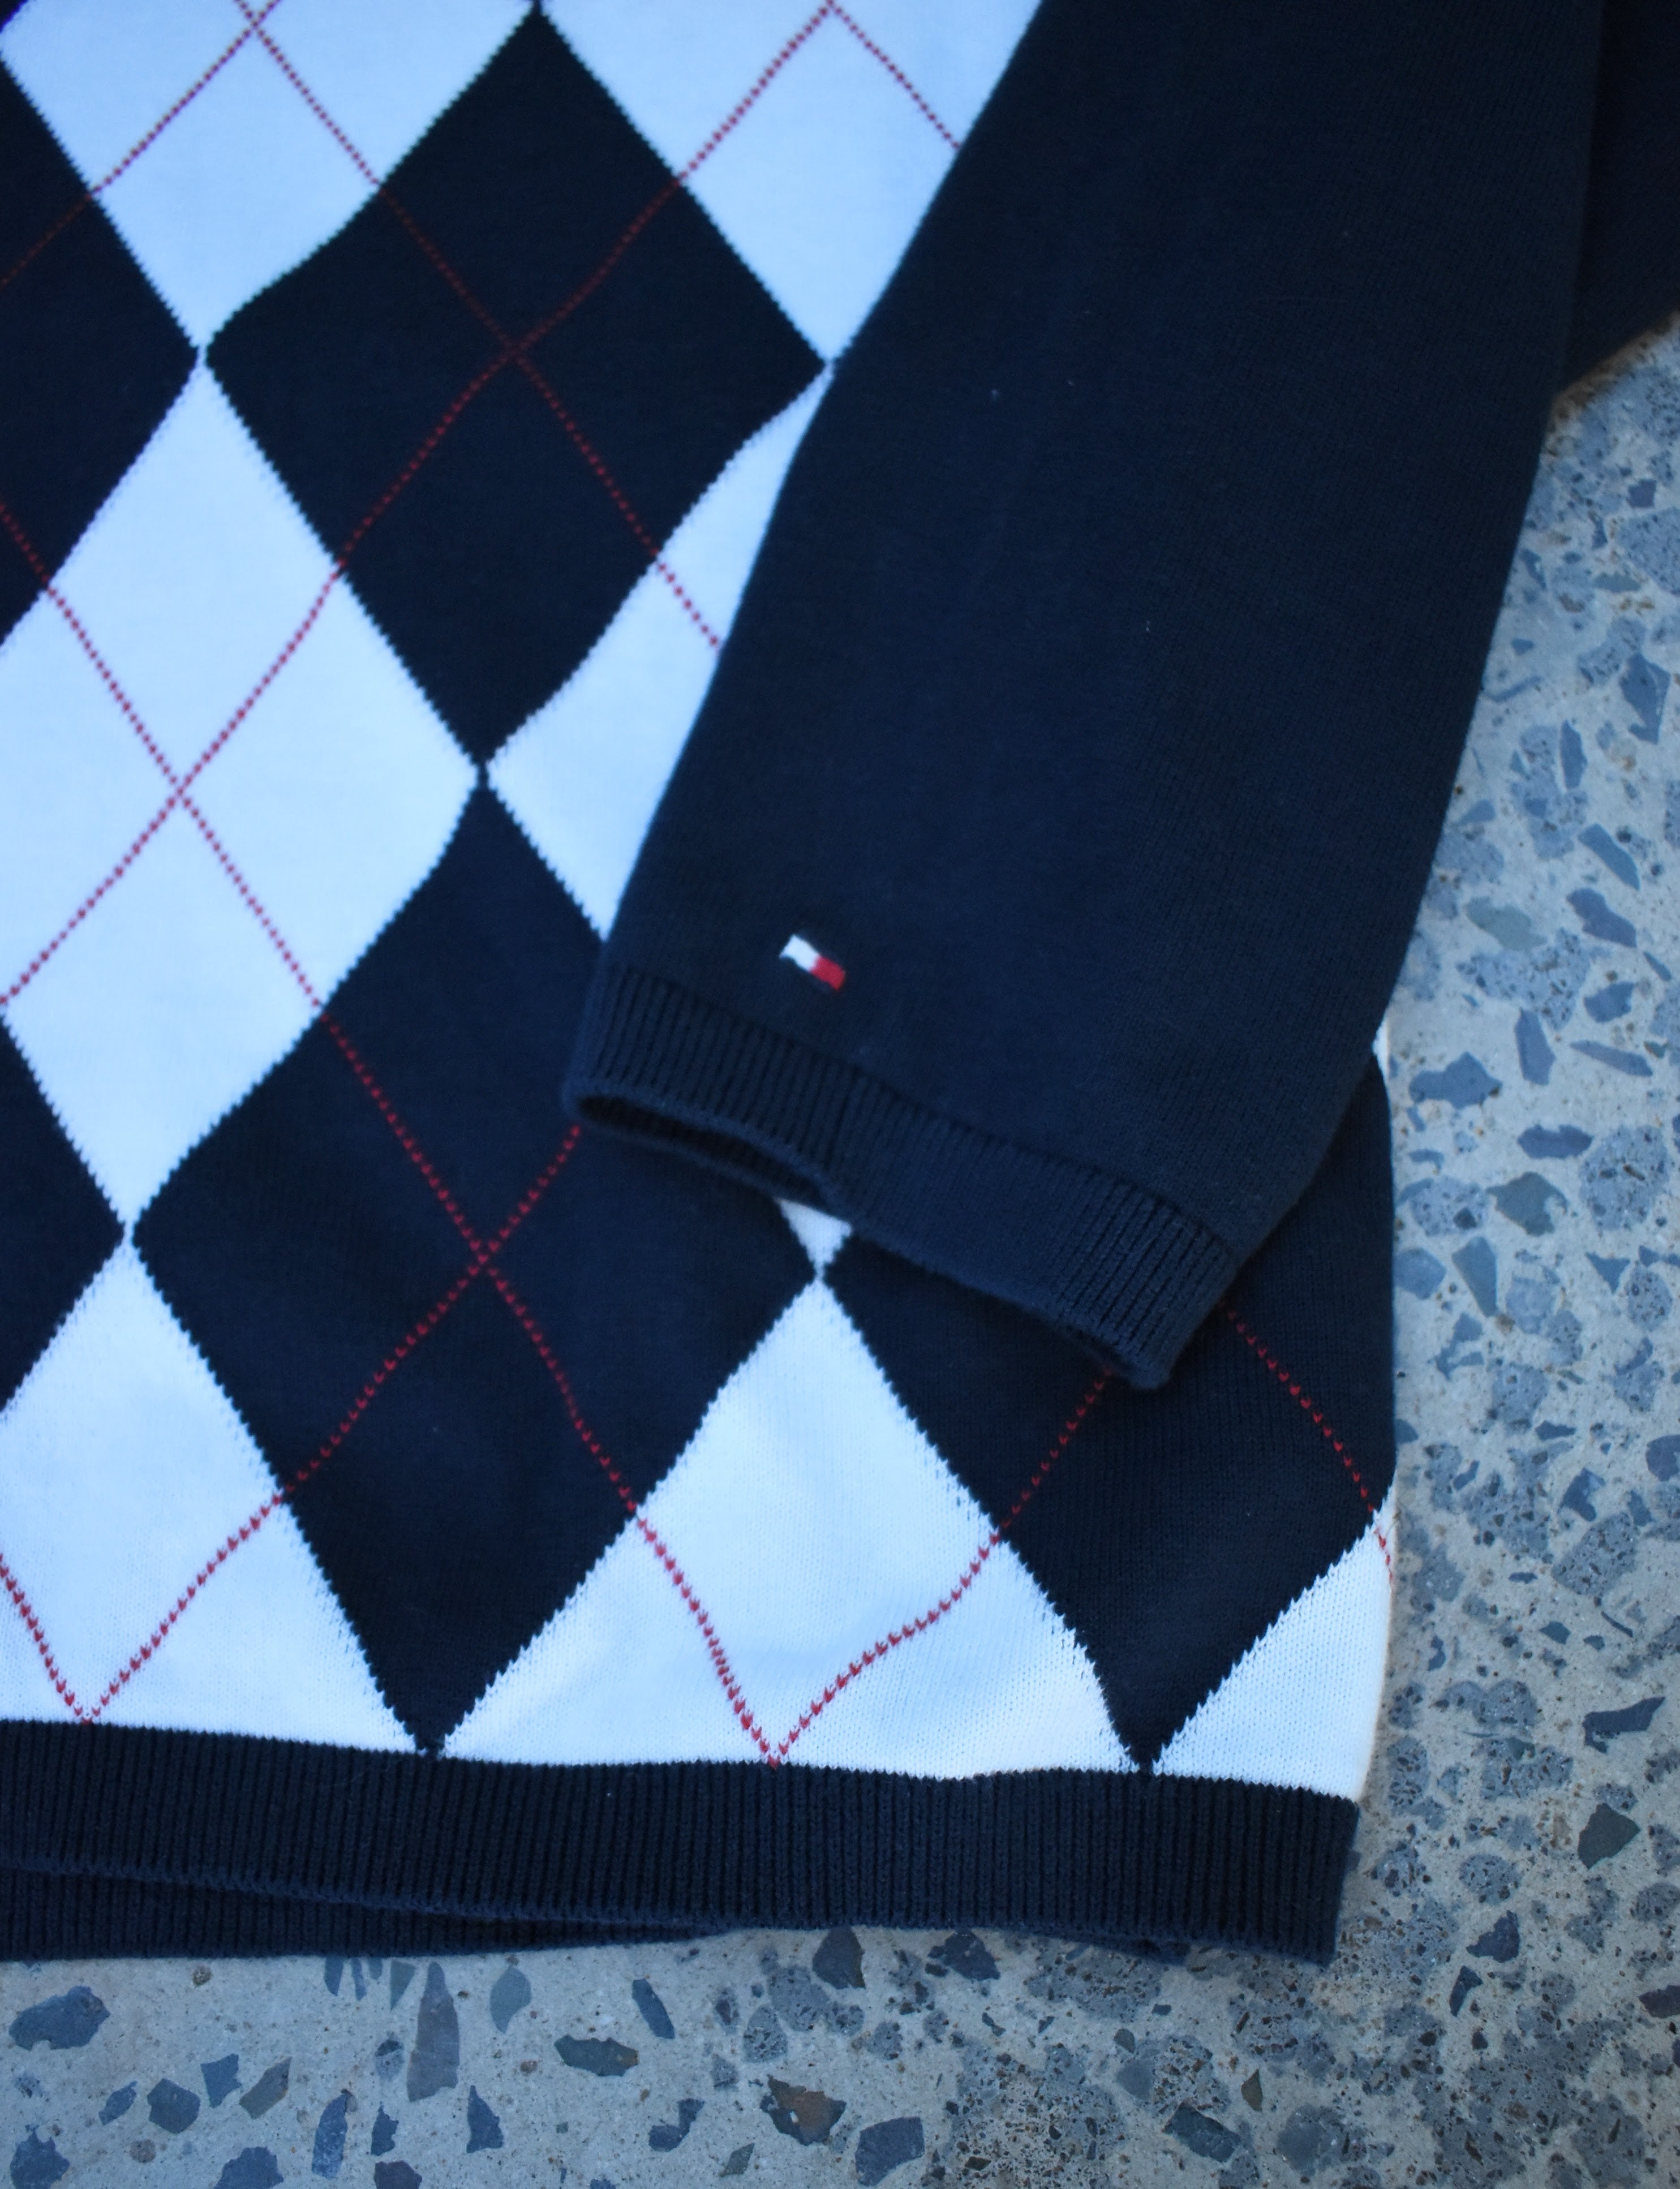 Vintage Tommy Hilfiger Sweater Diamond Pattern Knit XL